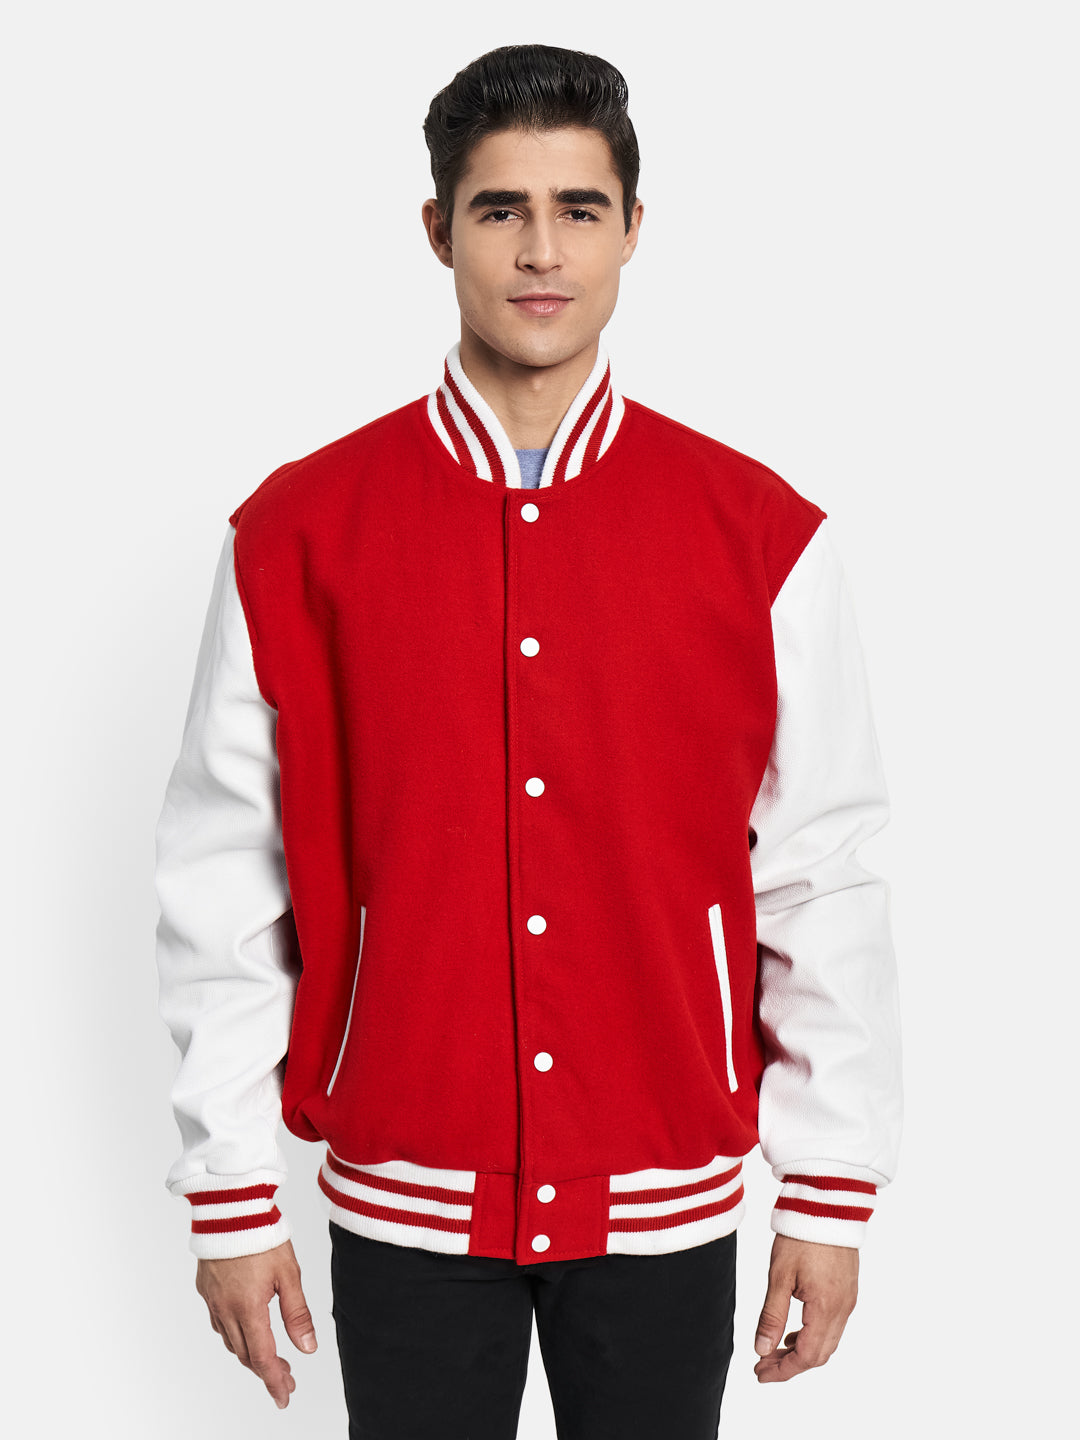 Red bomber jacket